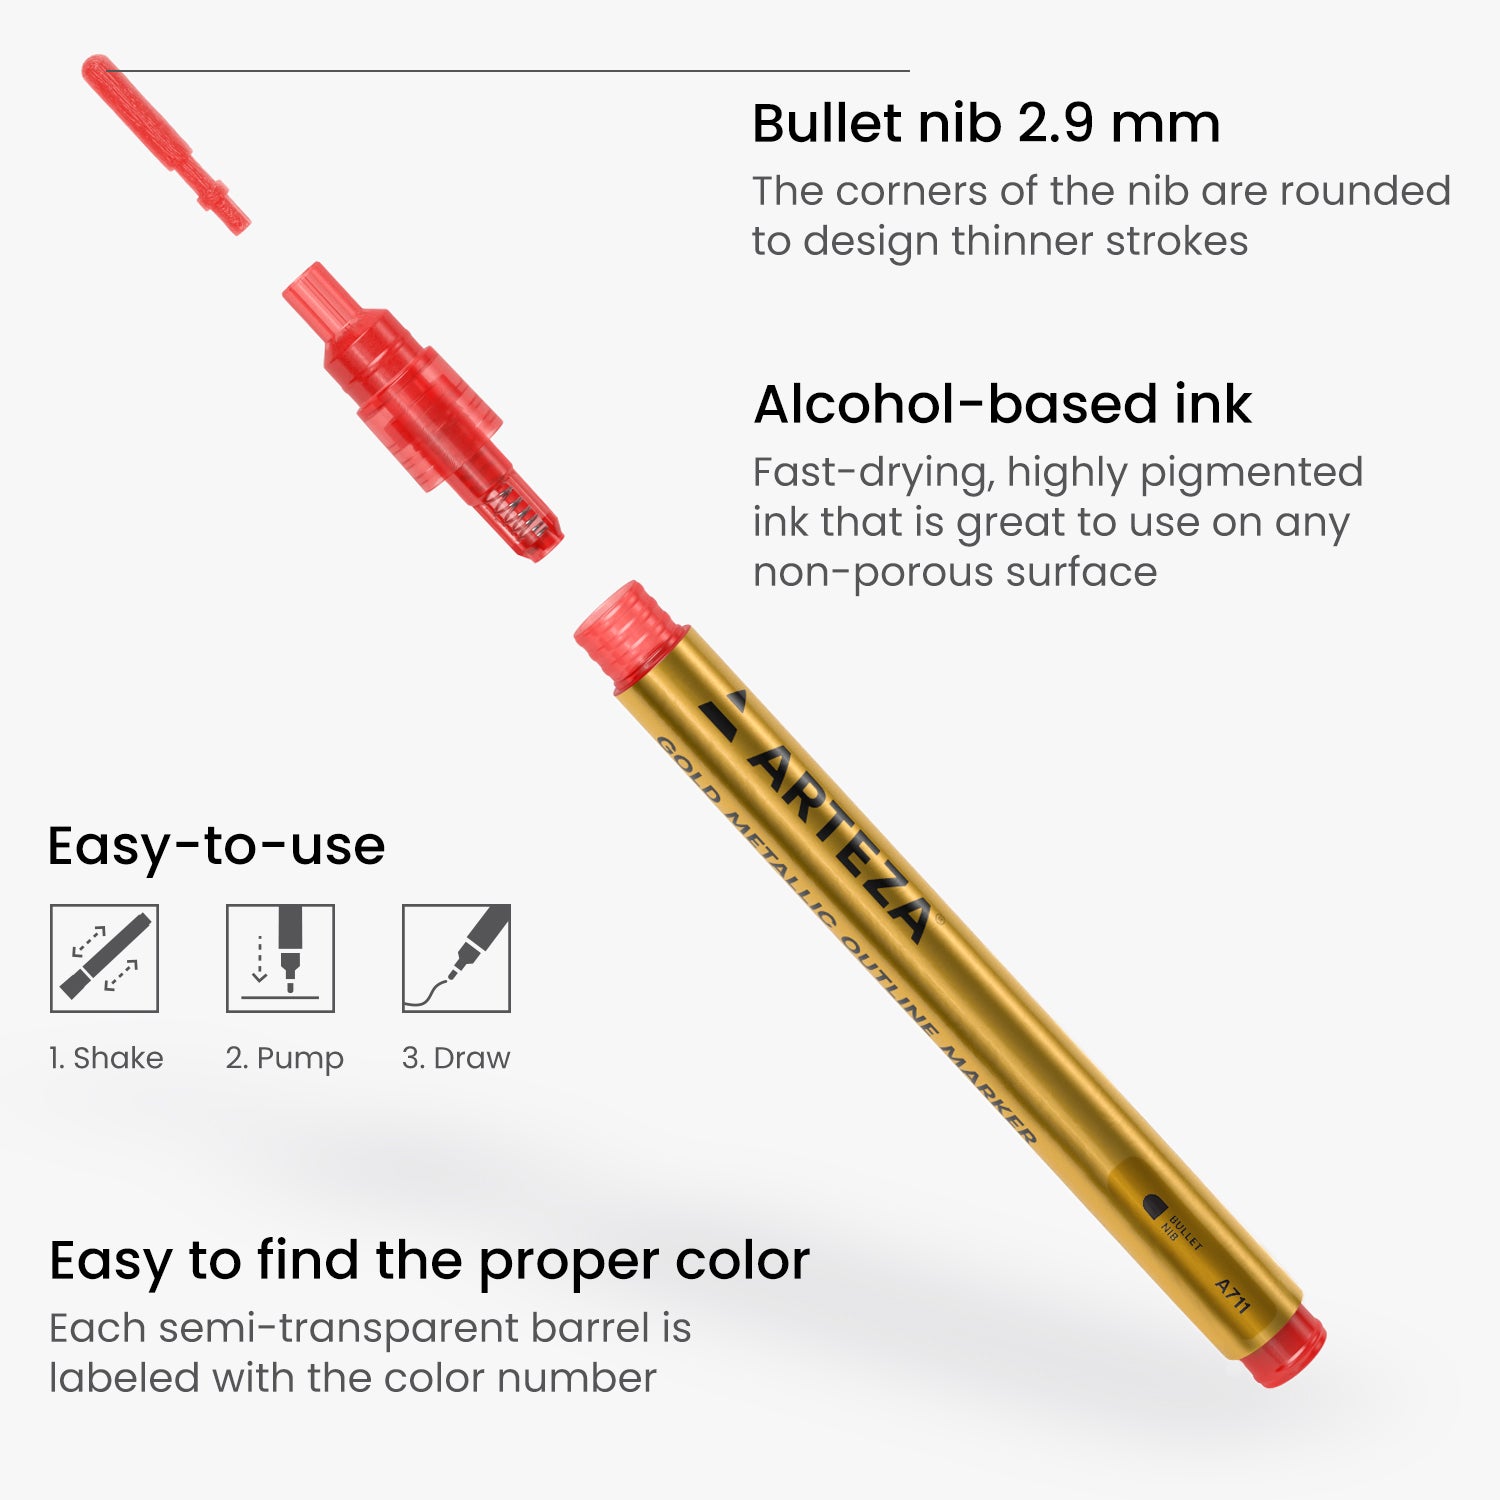 2.9 mm Bullet Nib, Alcohol-Based Ink 